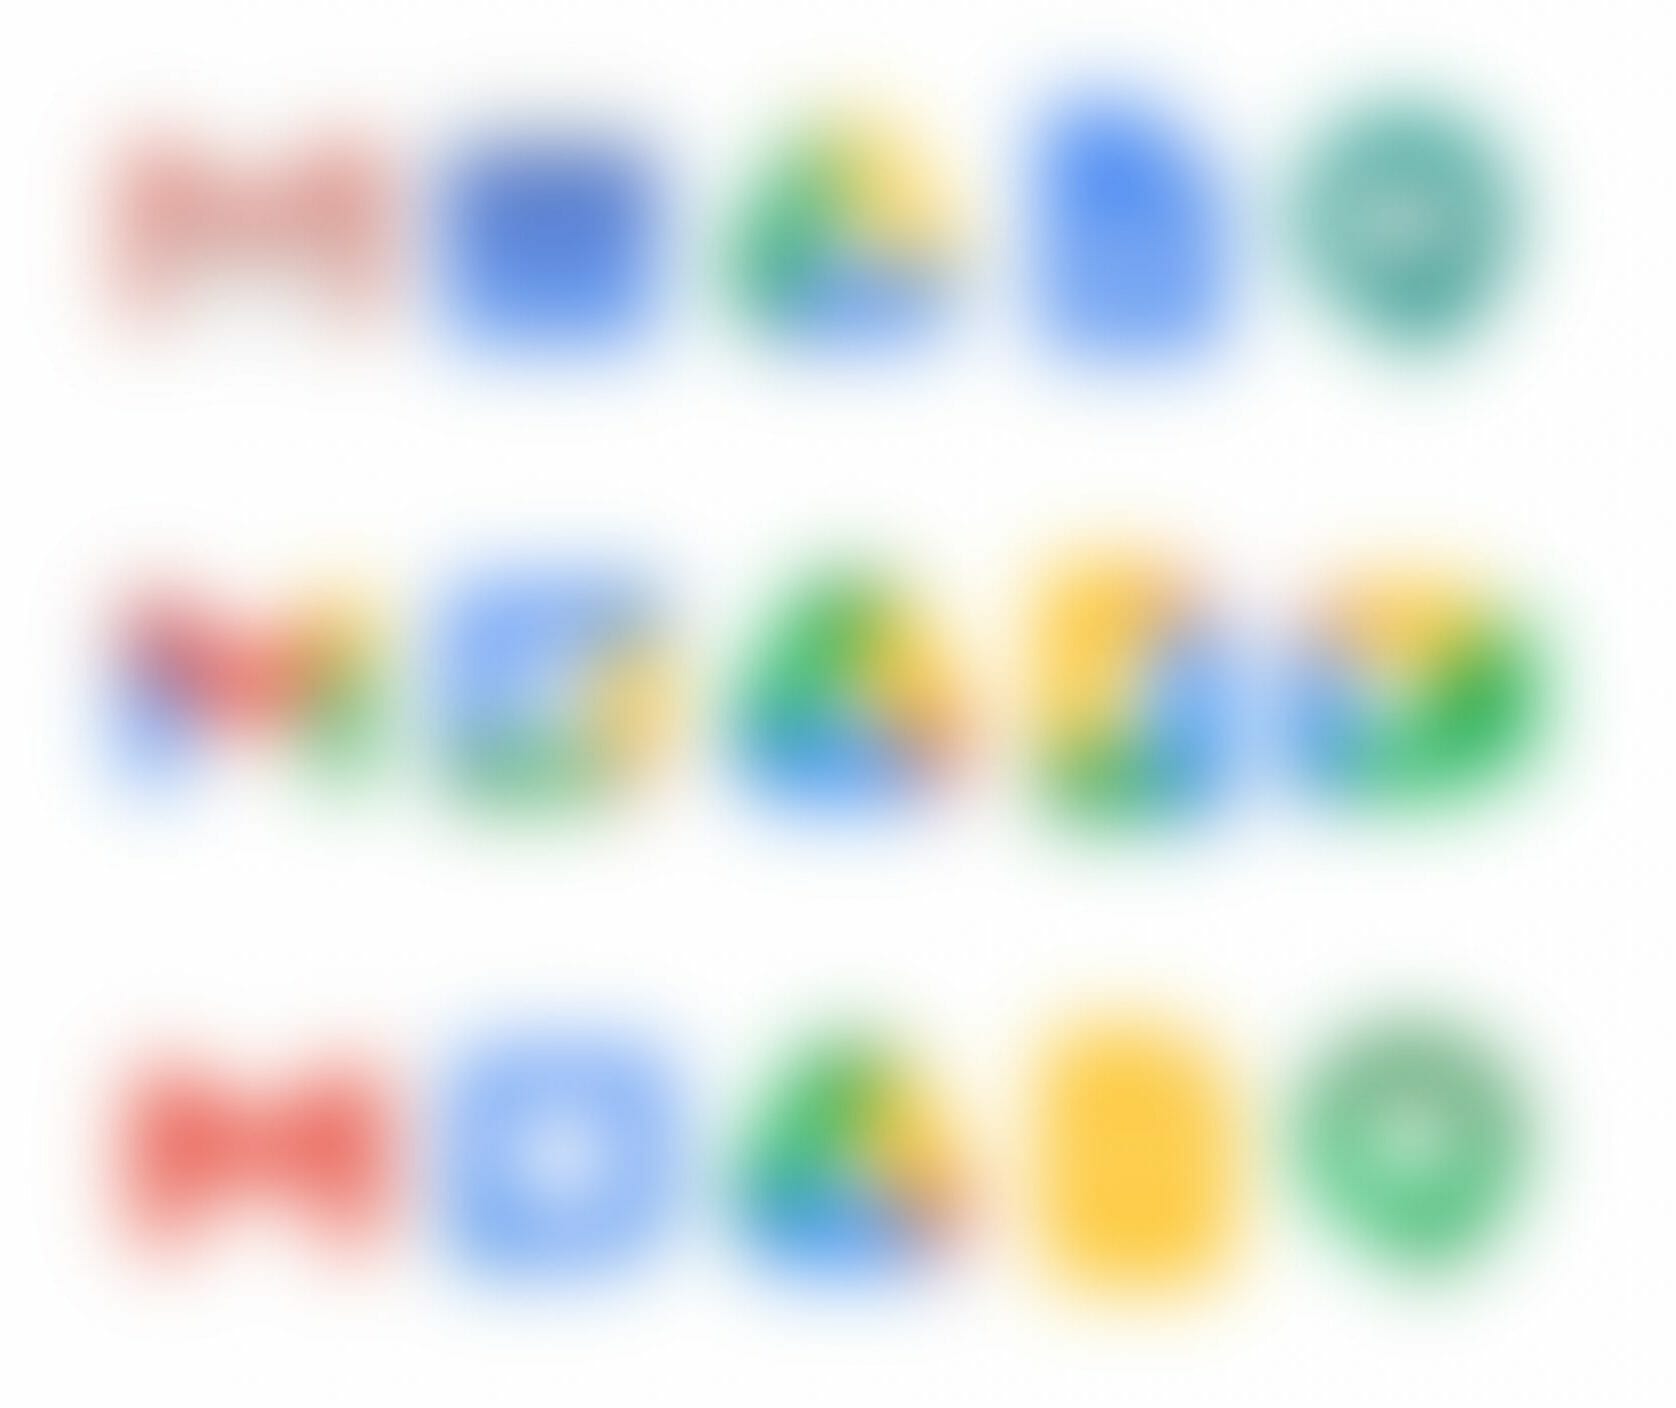 Blur Test DotYeti Google Logos - DotYeti.com Blog